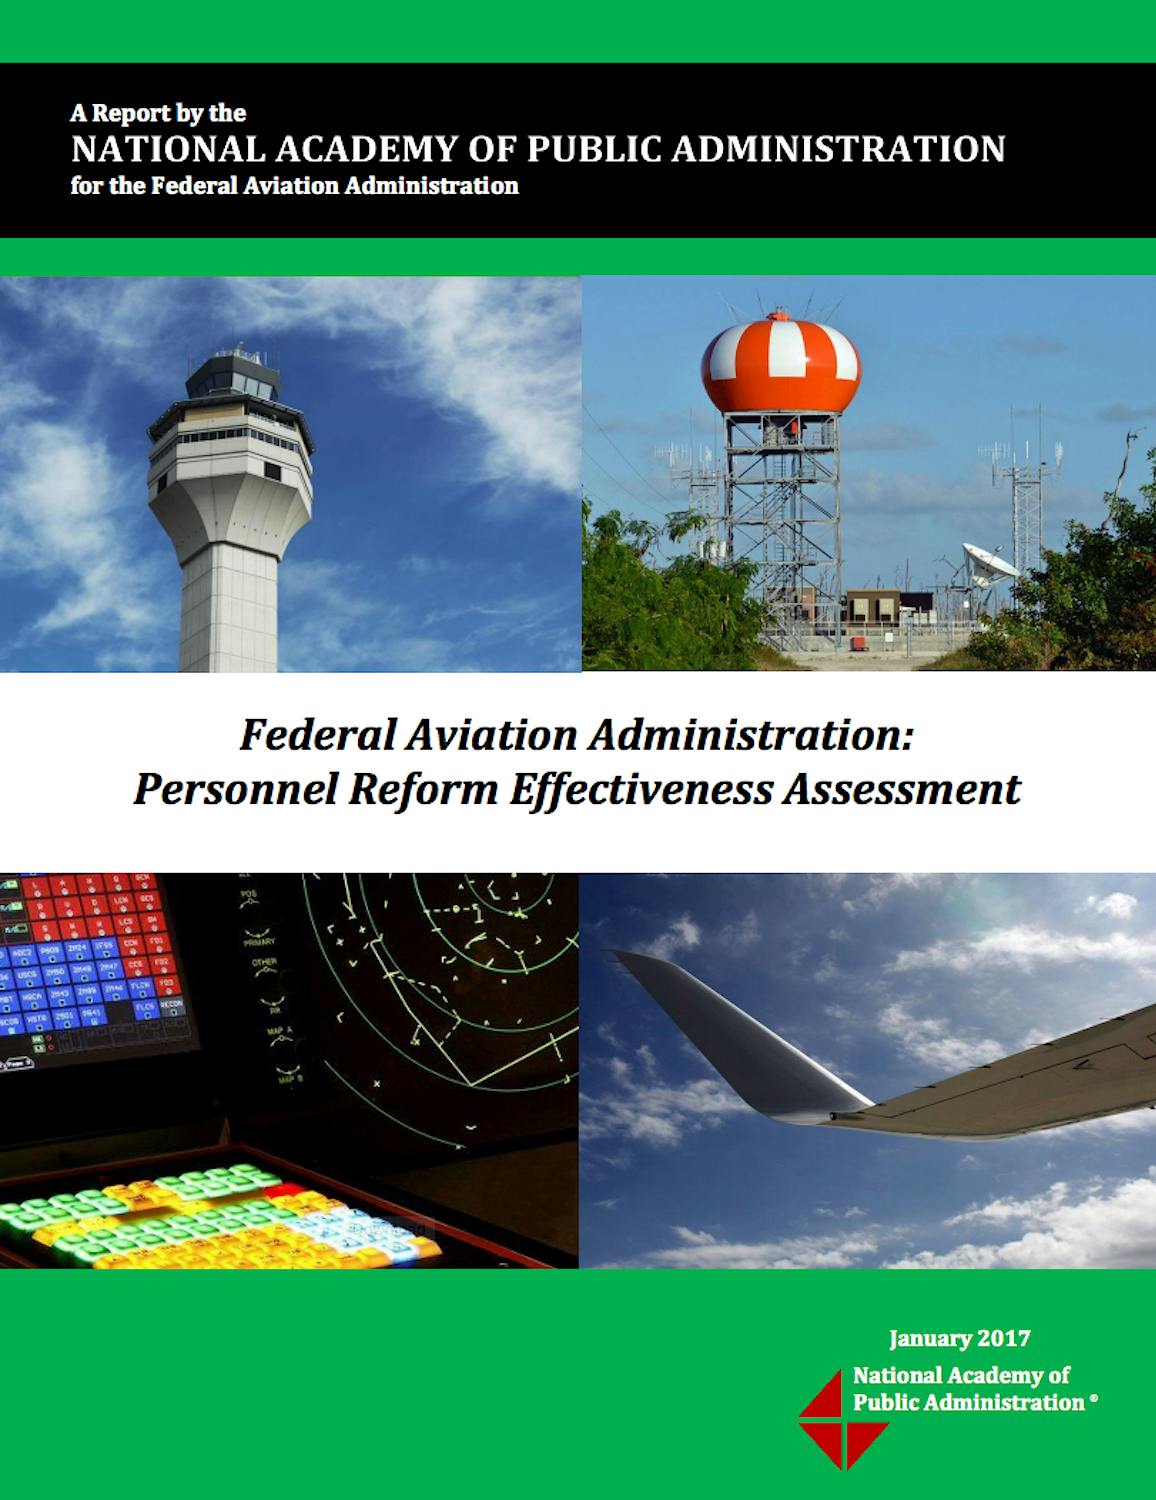 Final FAA Report